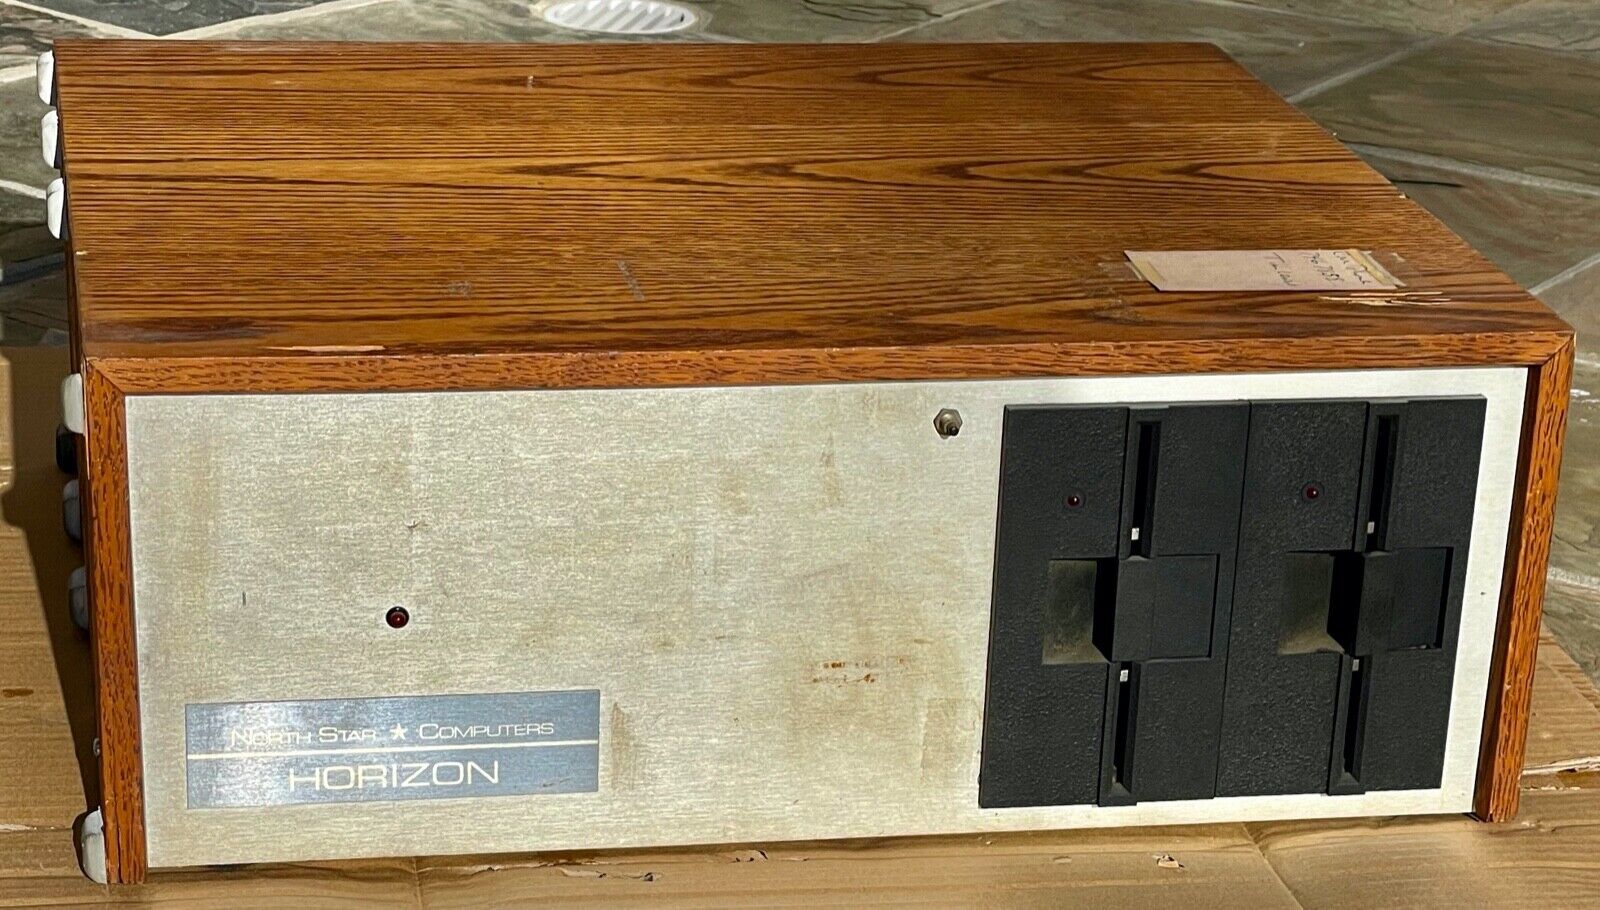 North Star Horizon Vintage S100 Computer Buy It Now $799